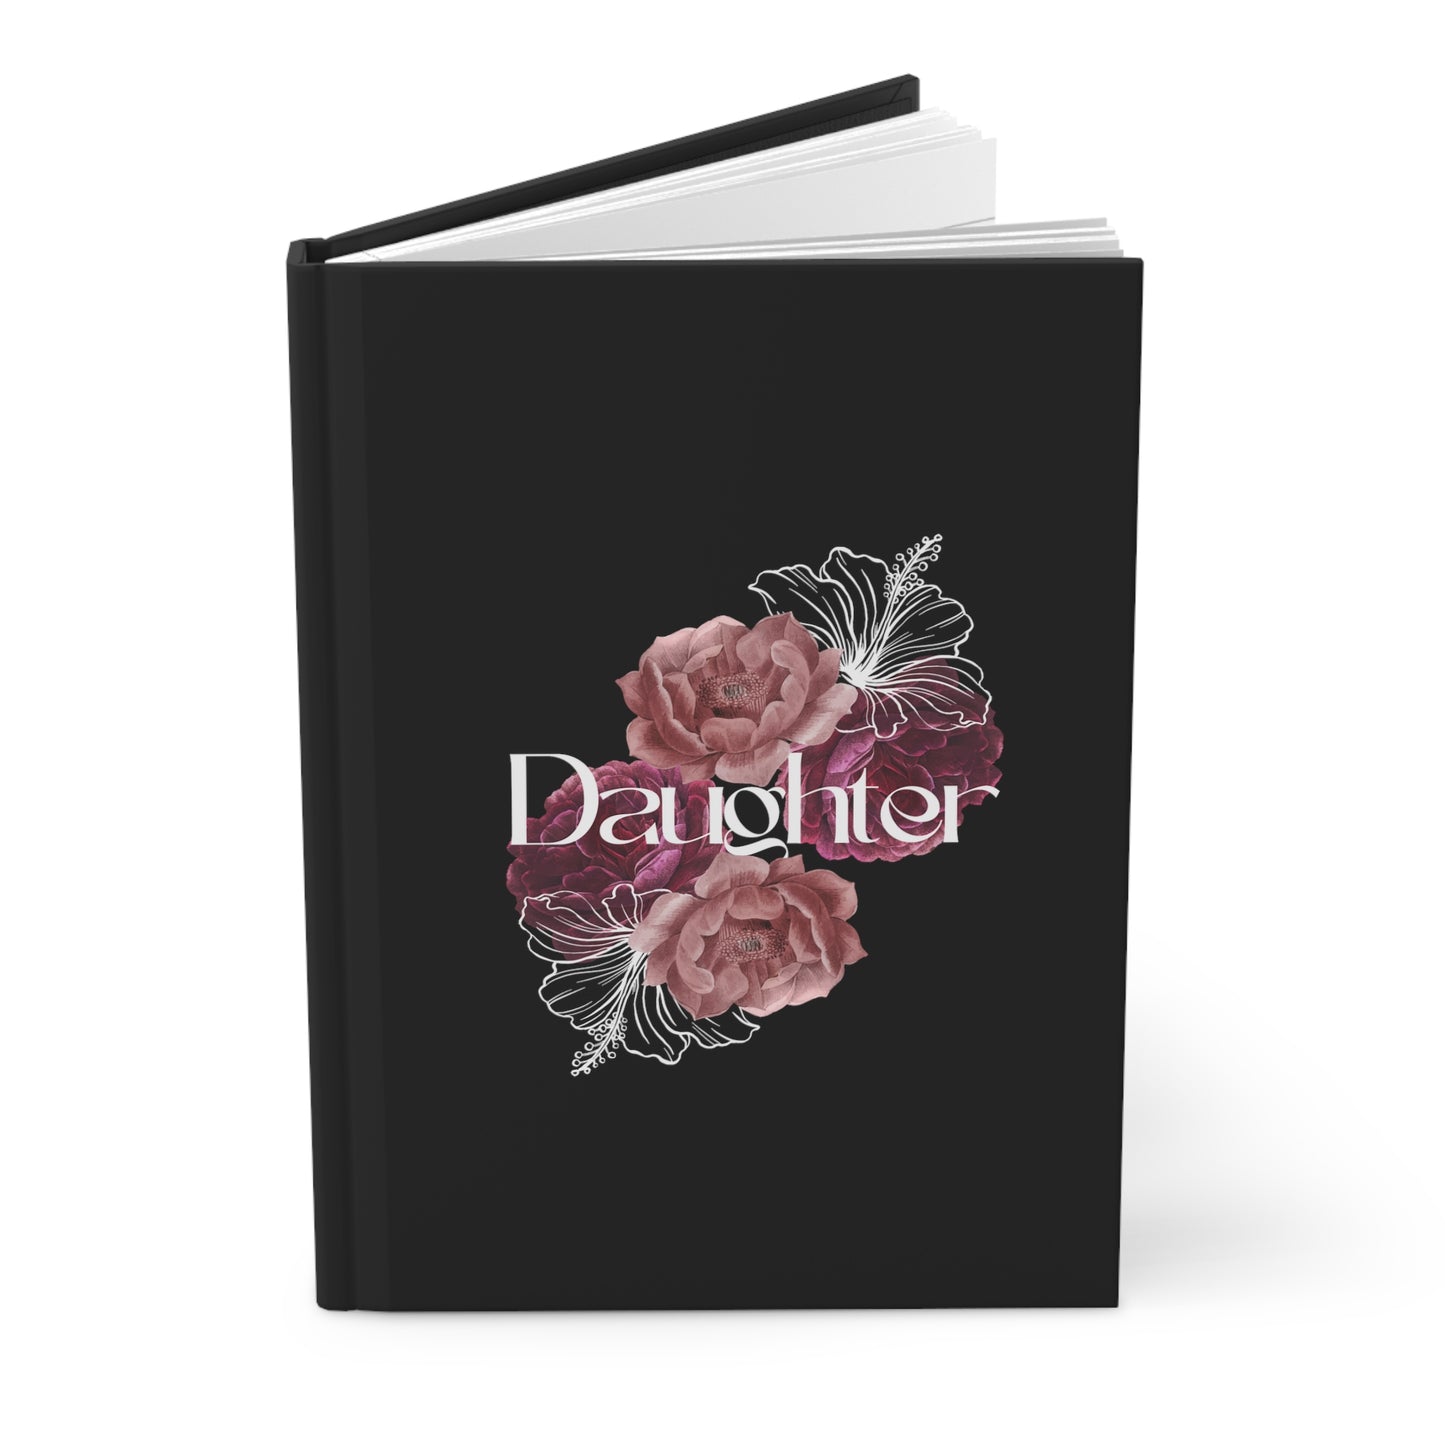 Daughter Hardcover Journal